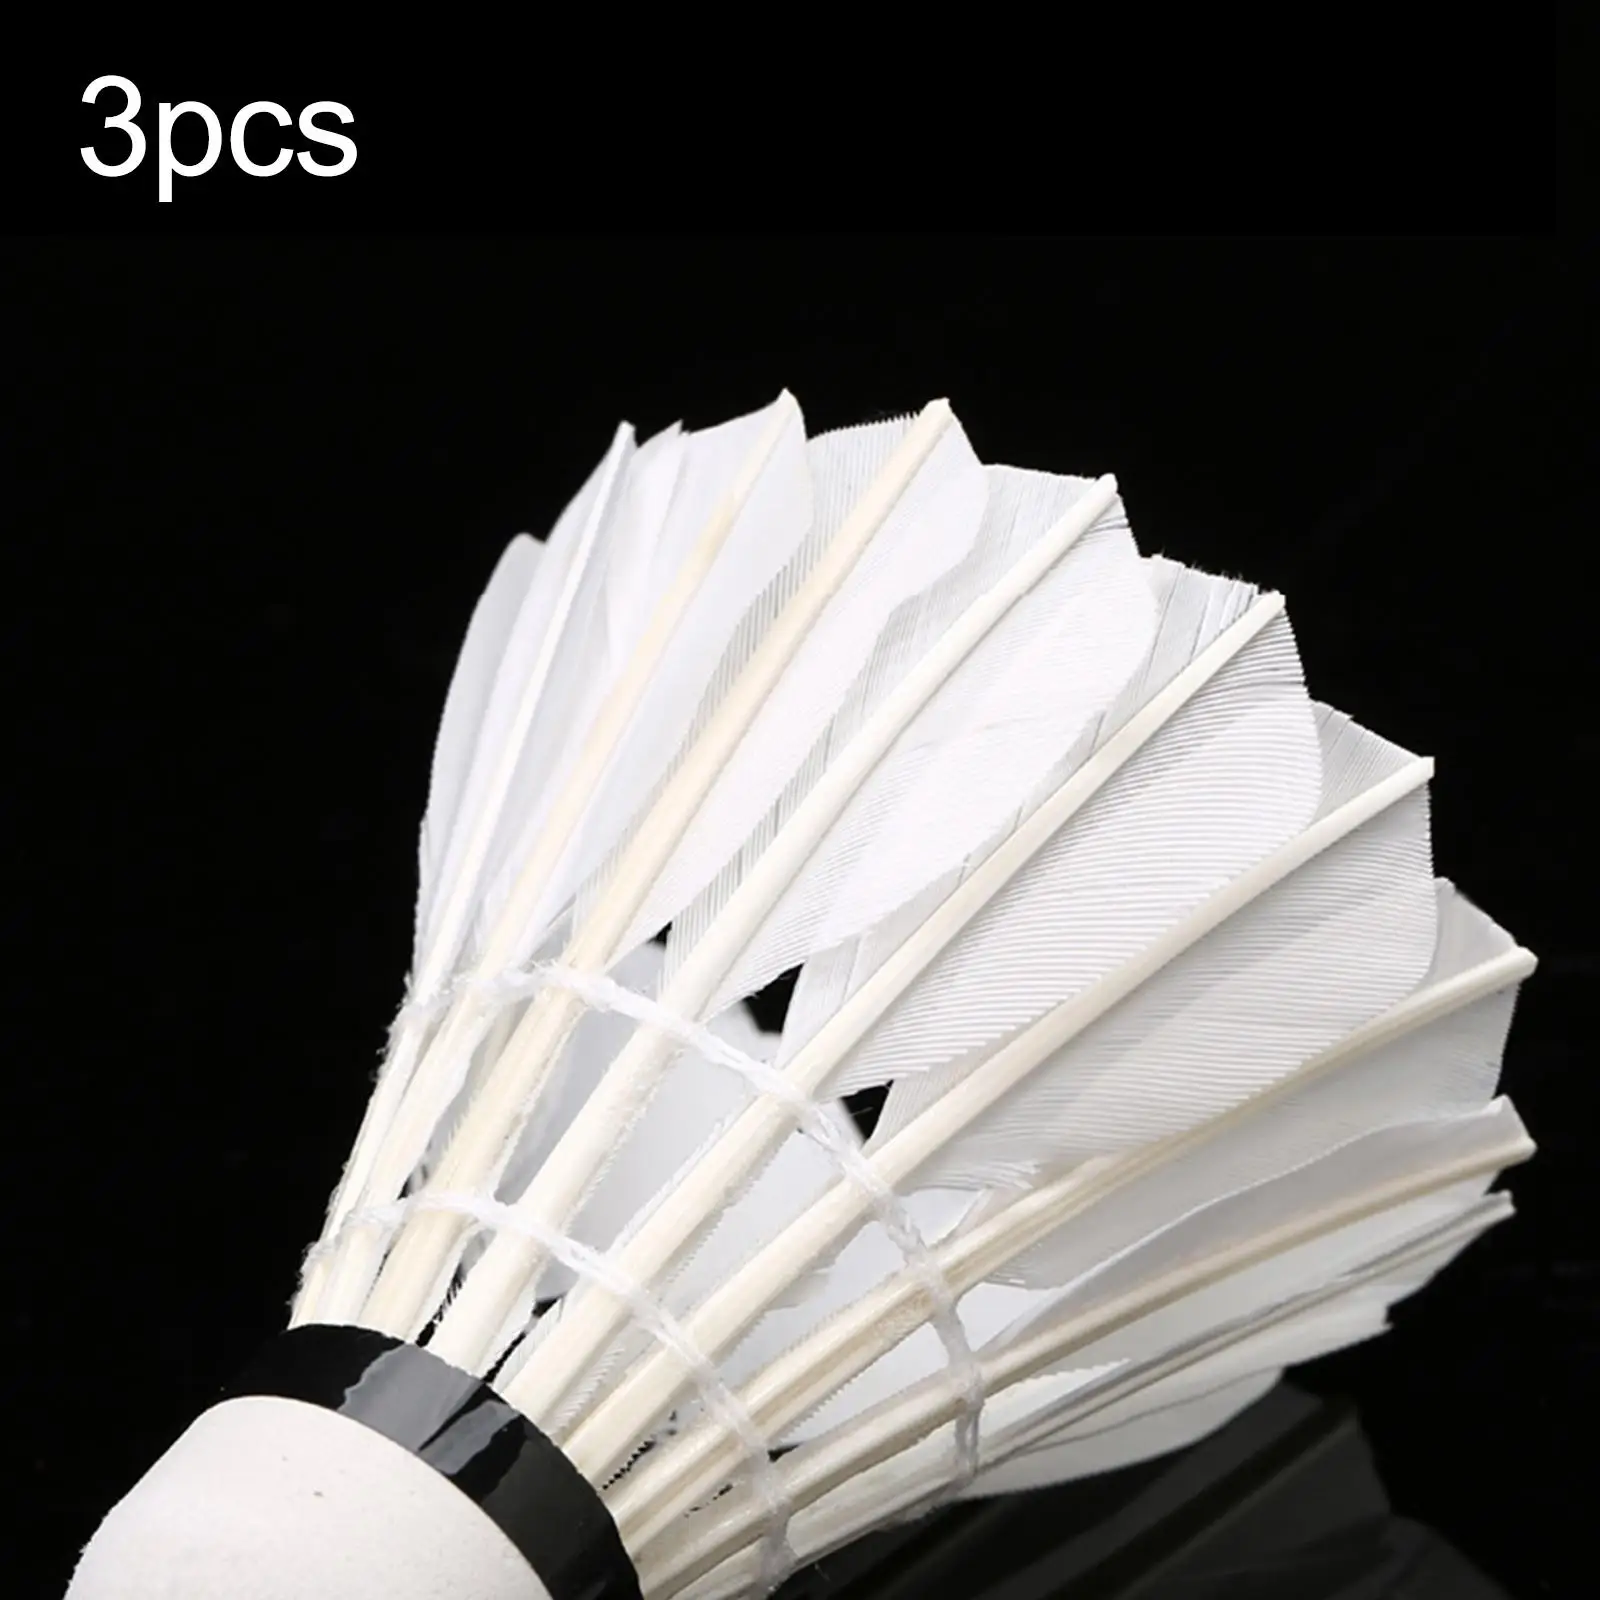 3Pcs Badminton Shuttlecocks White for Practice Training Indoor Outdoor